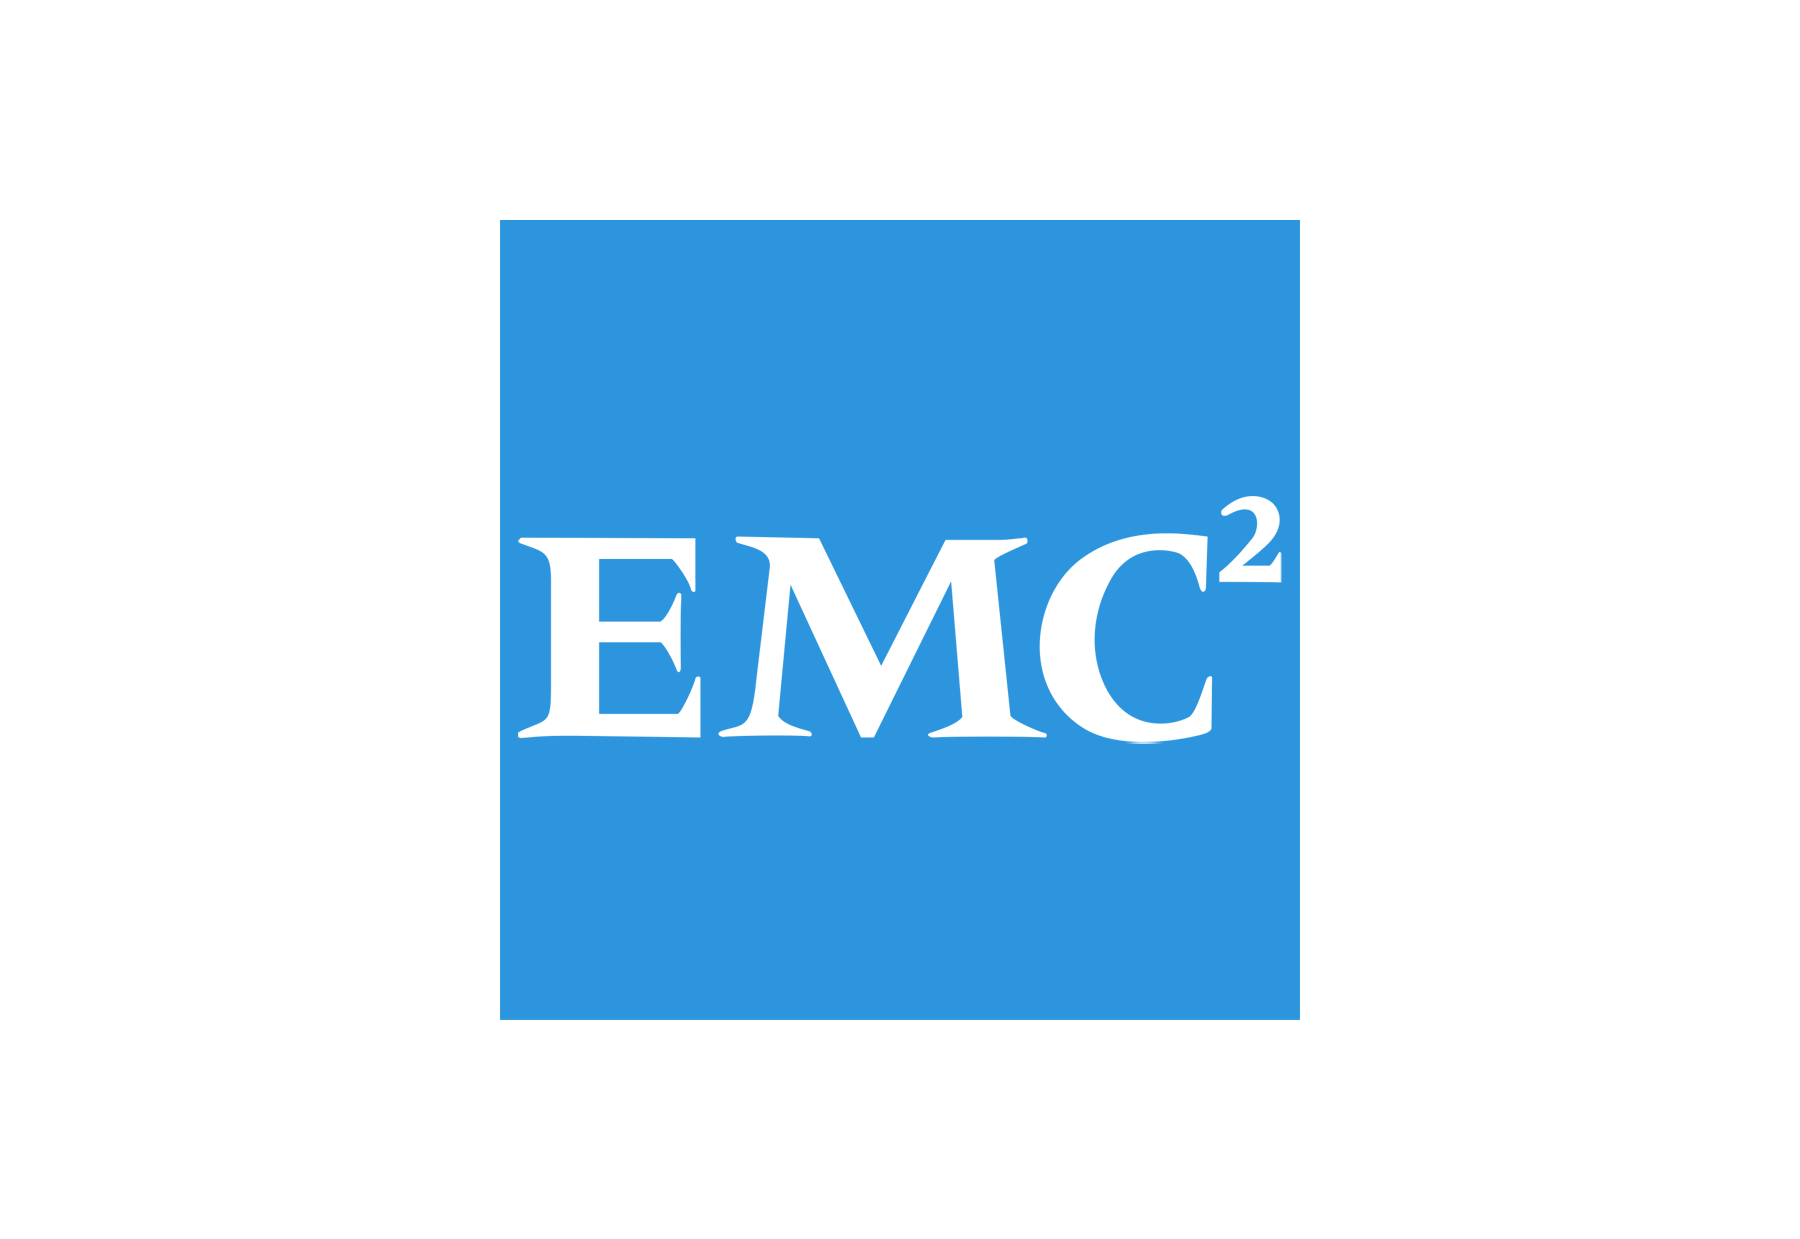 EMC Corporation Logo - EMC logo | Dwglogo